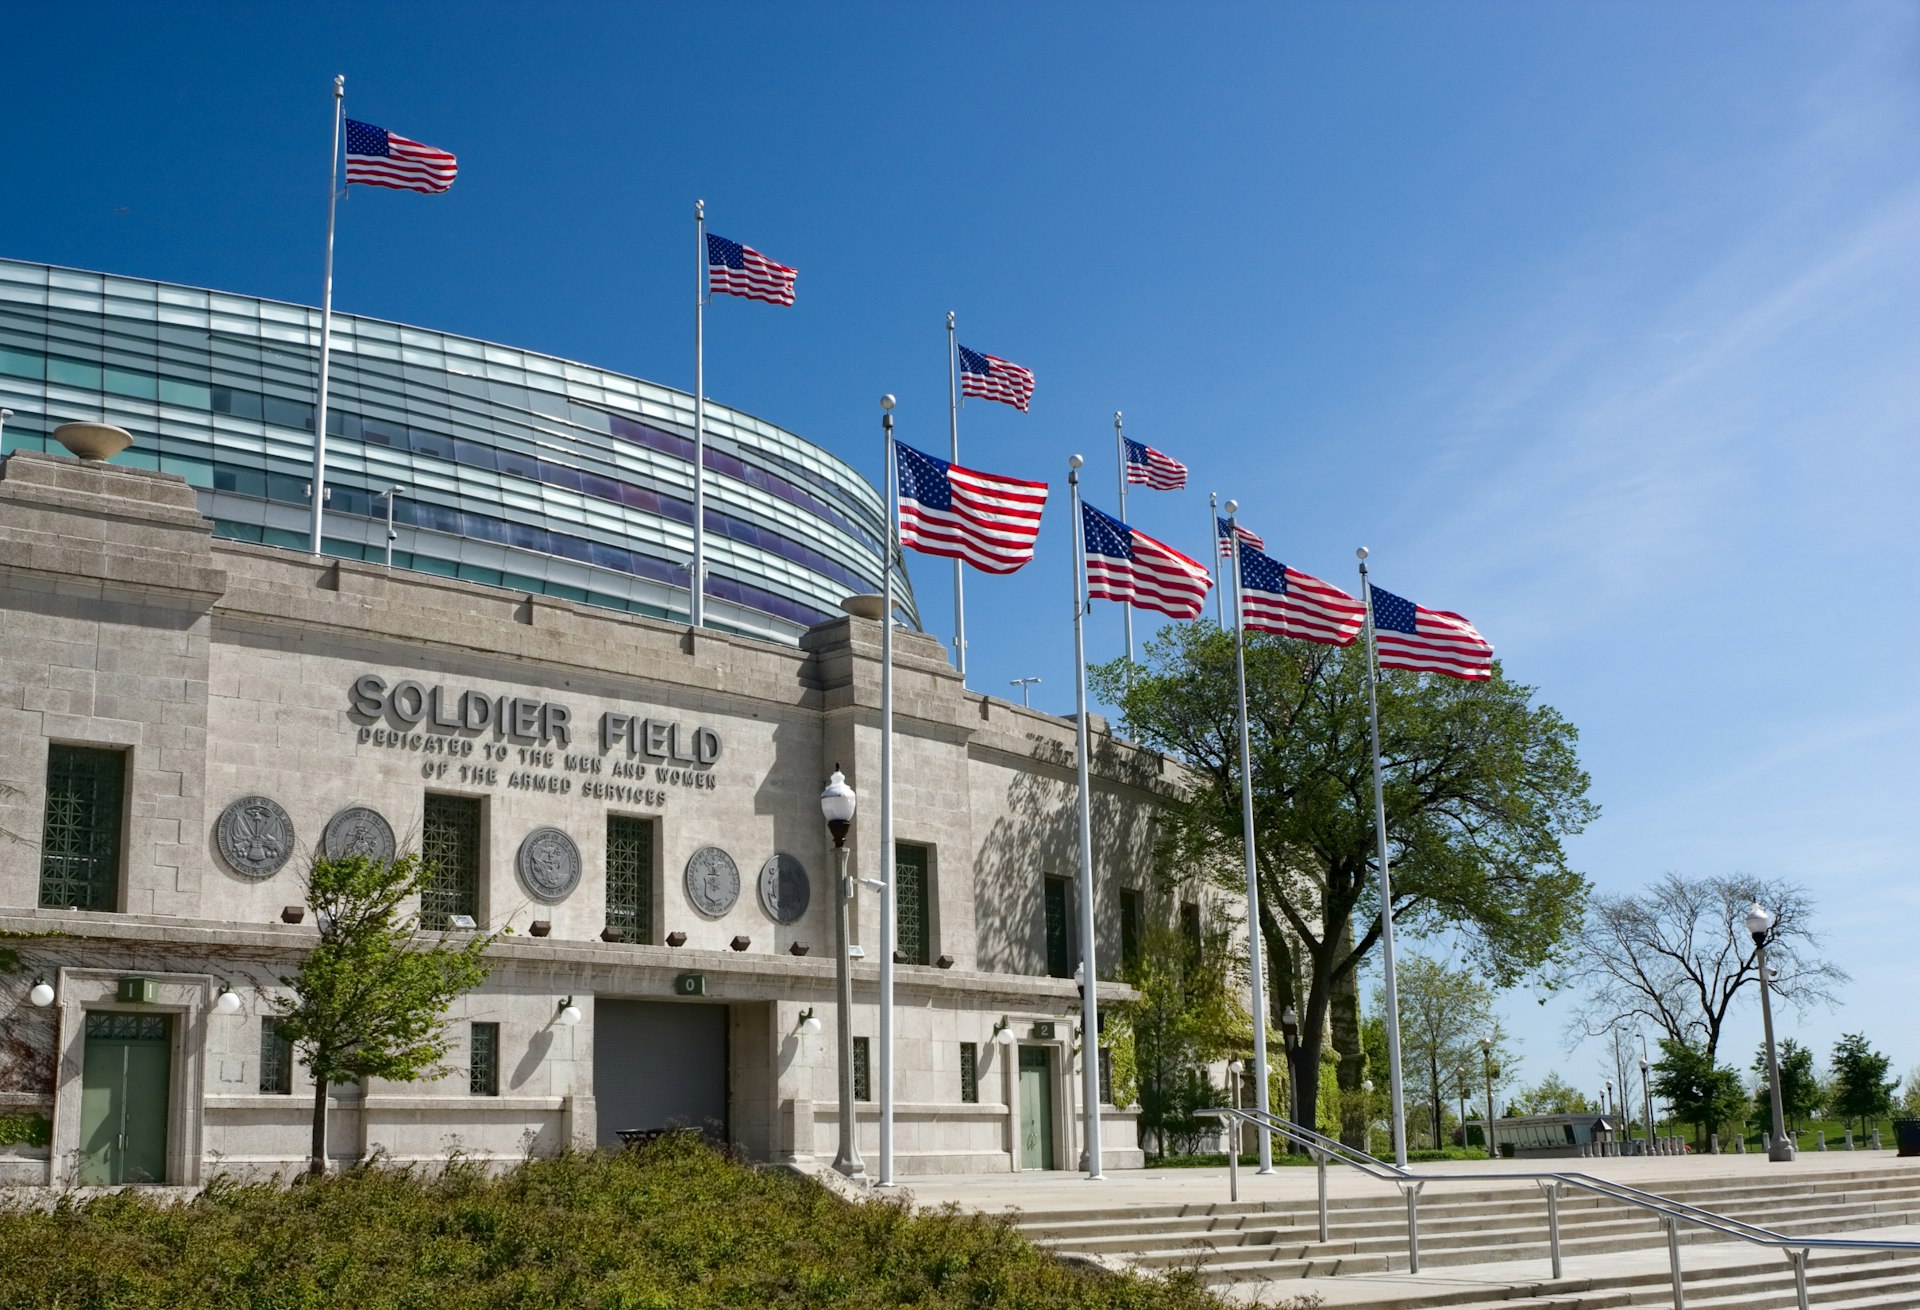 Chicago's historic Soldier Field